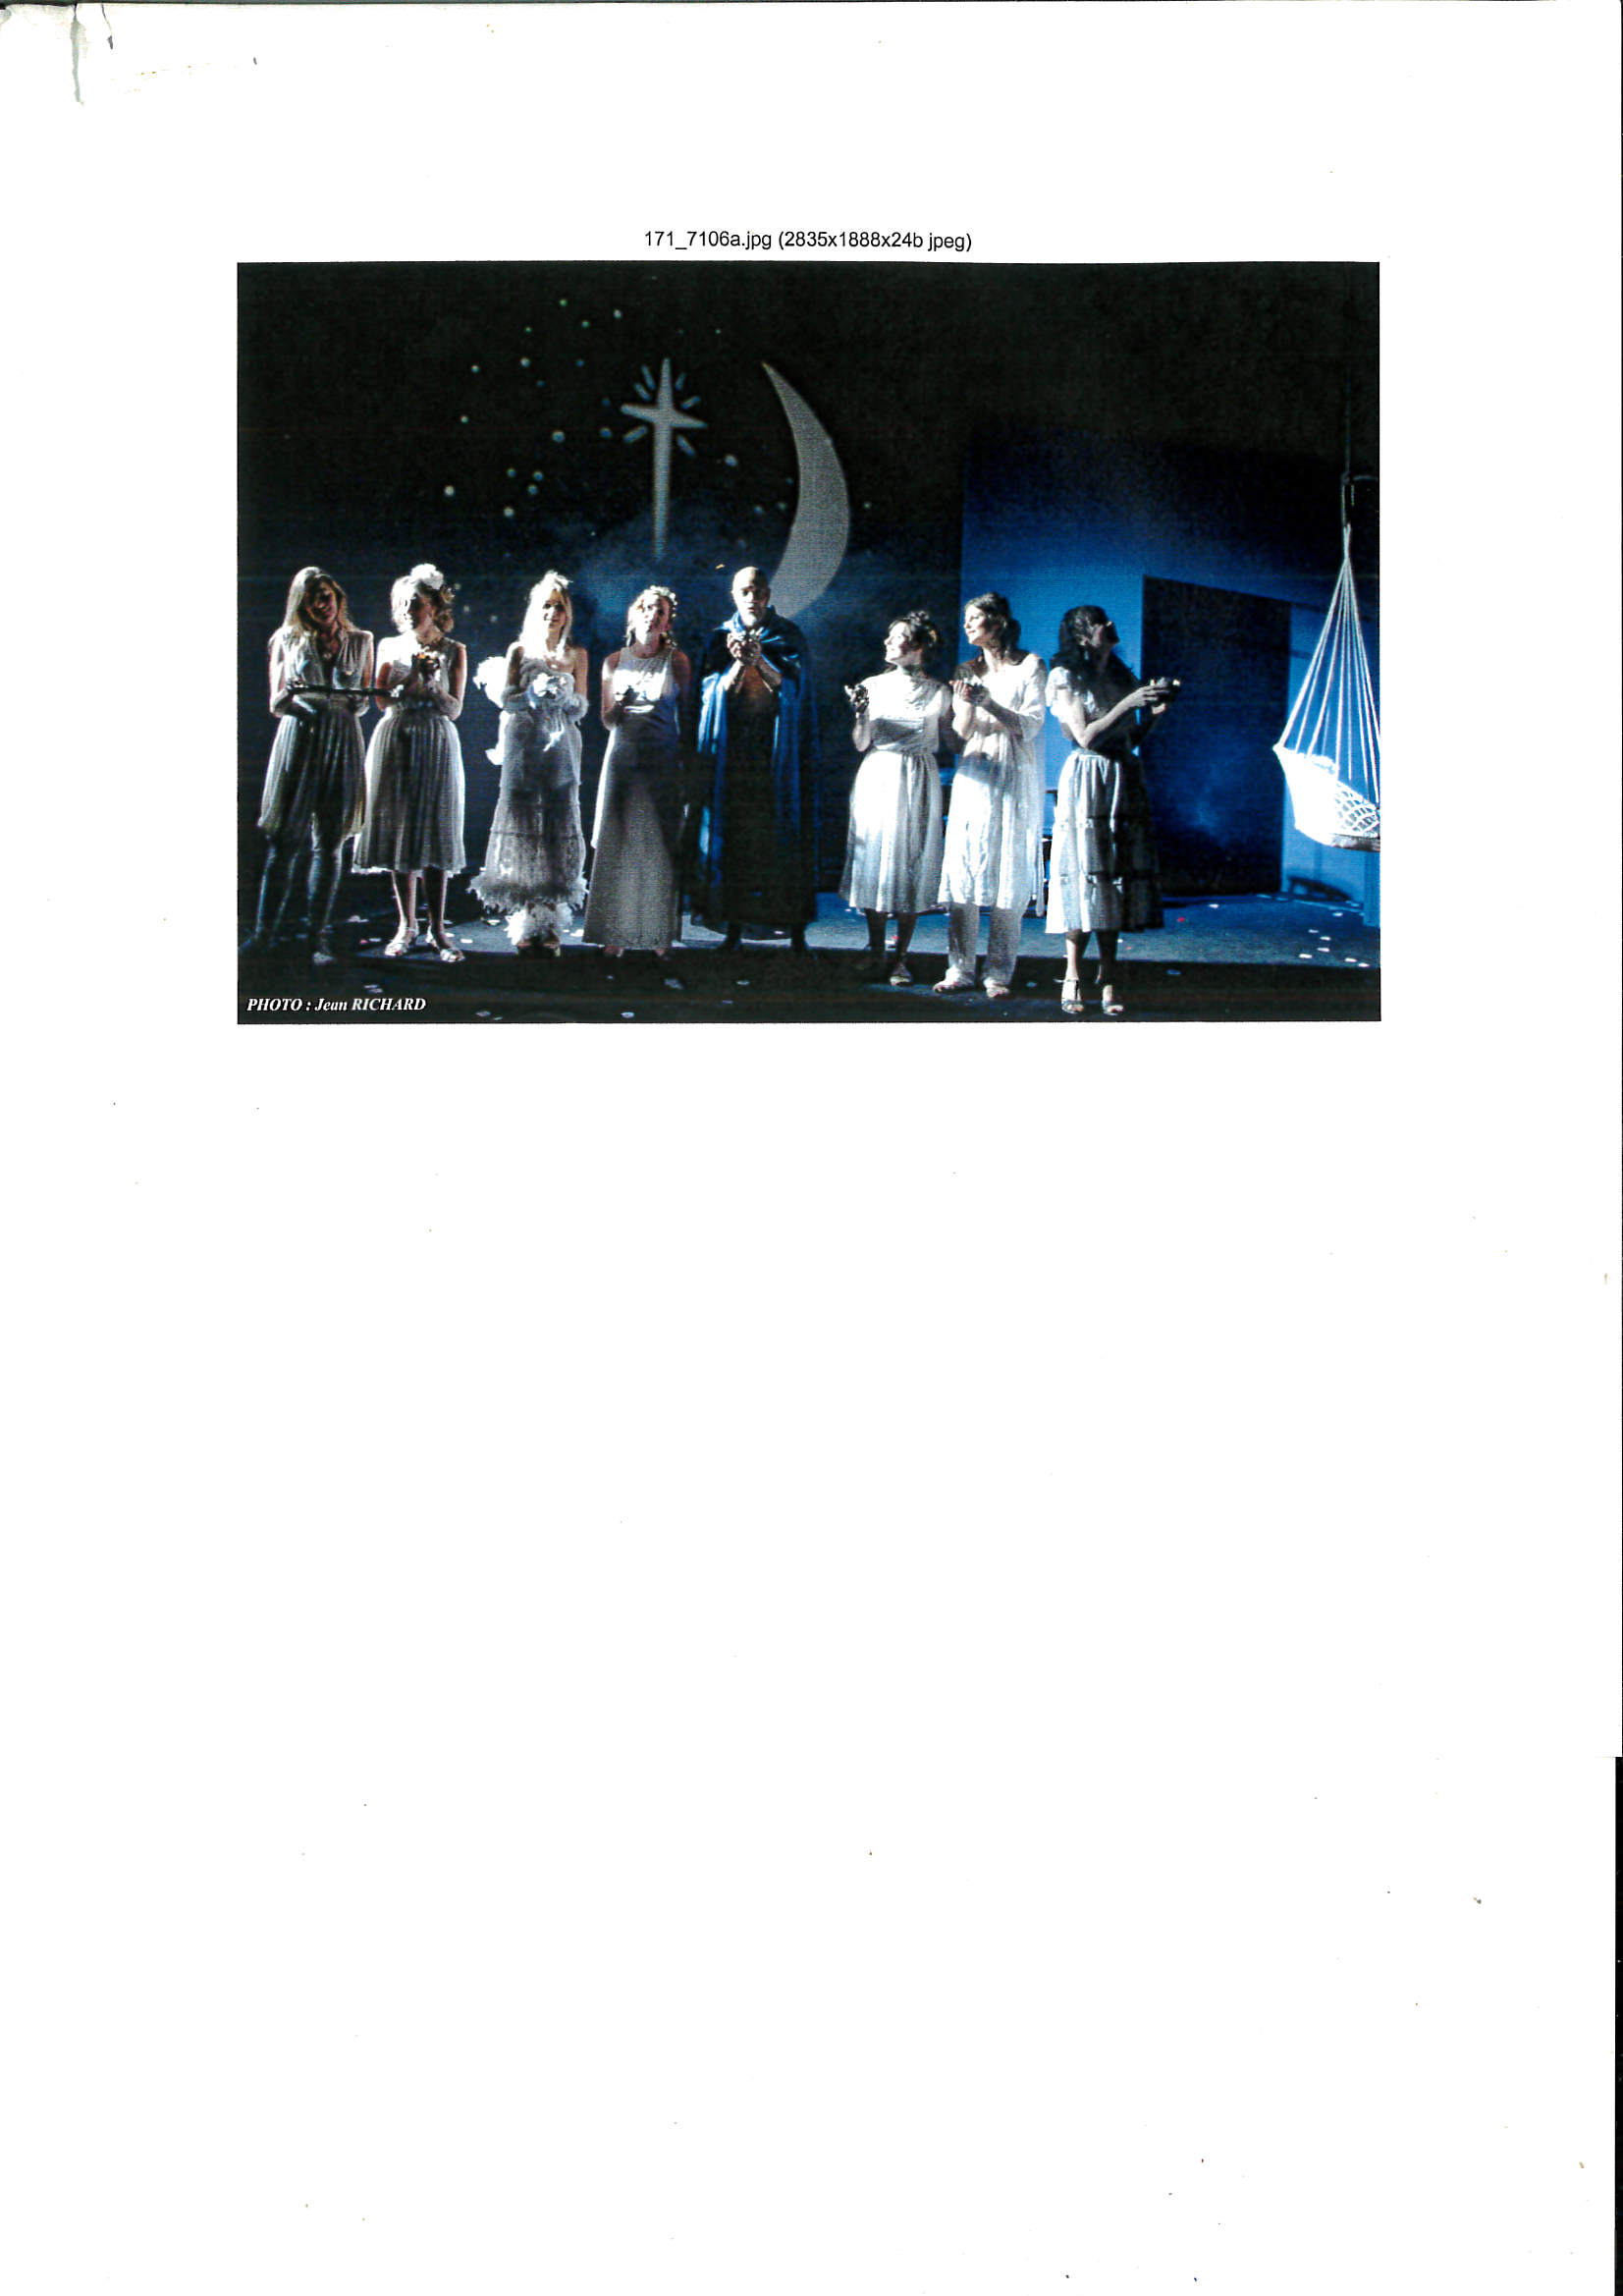 OWAP MIDSUMMER NIGHT'S DREAM Shakespeare   Kim's production at Comédie Française Paris France 2nd year nighttime scene.jpg